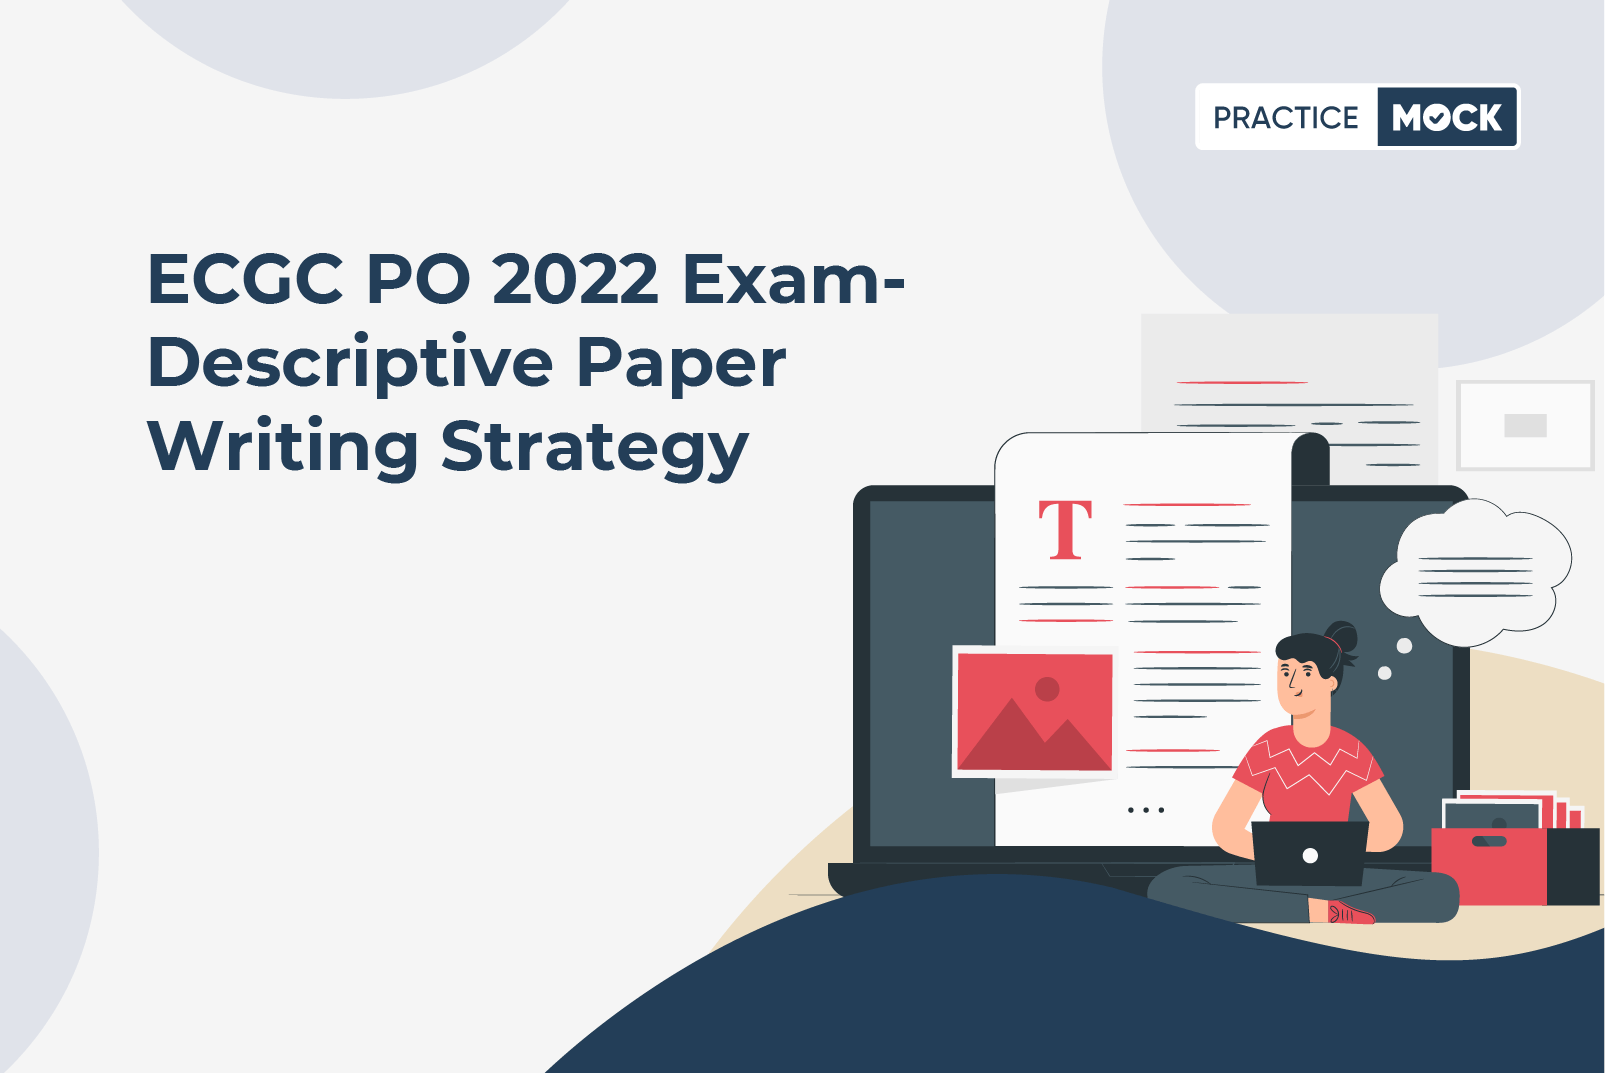 Tips on Descriptive Paper Writing for ECGC PO 2022 Exam